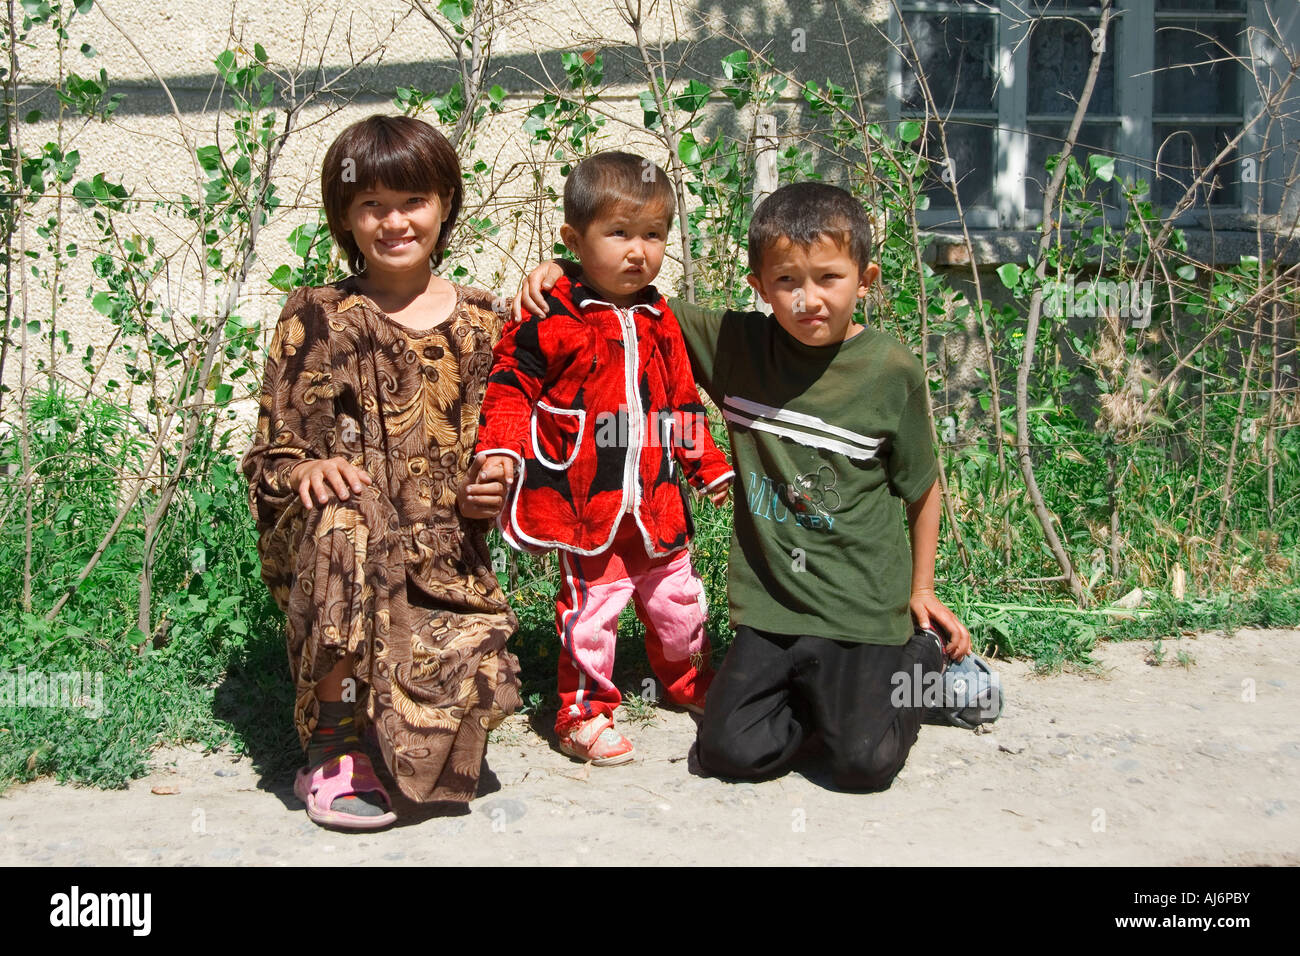 Uzbek children Uzbekistan Stock Photo